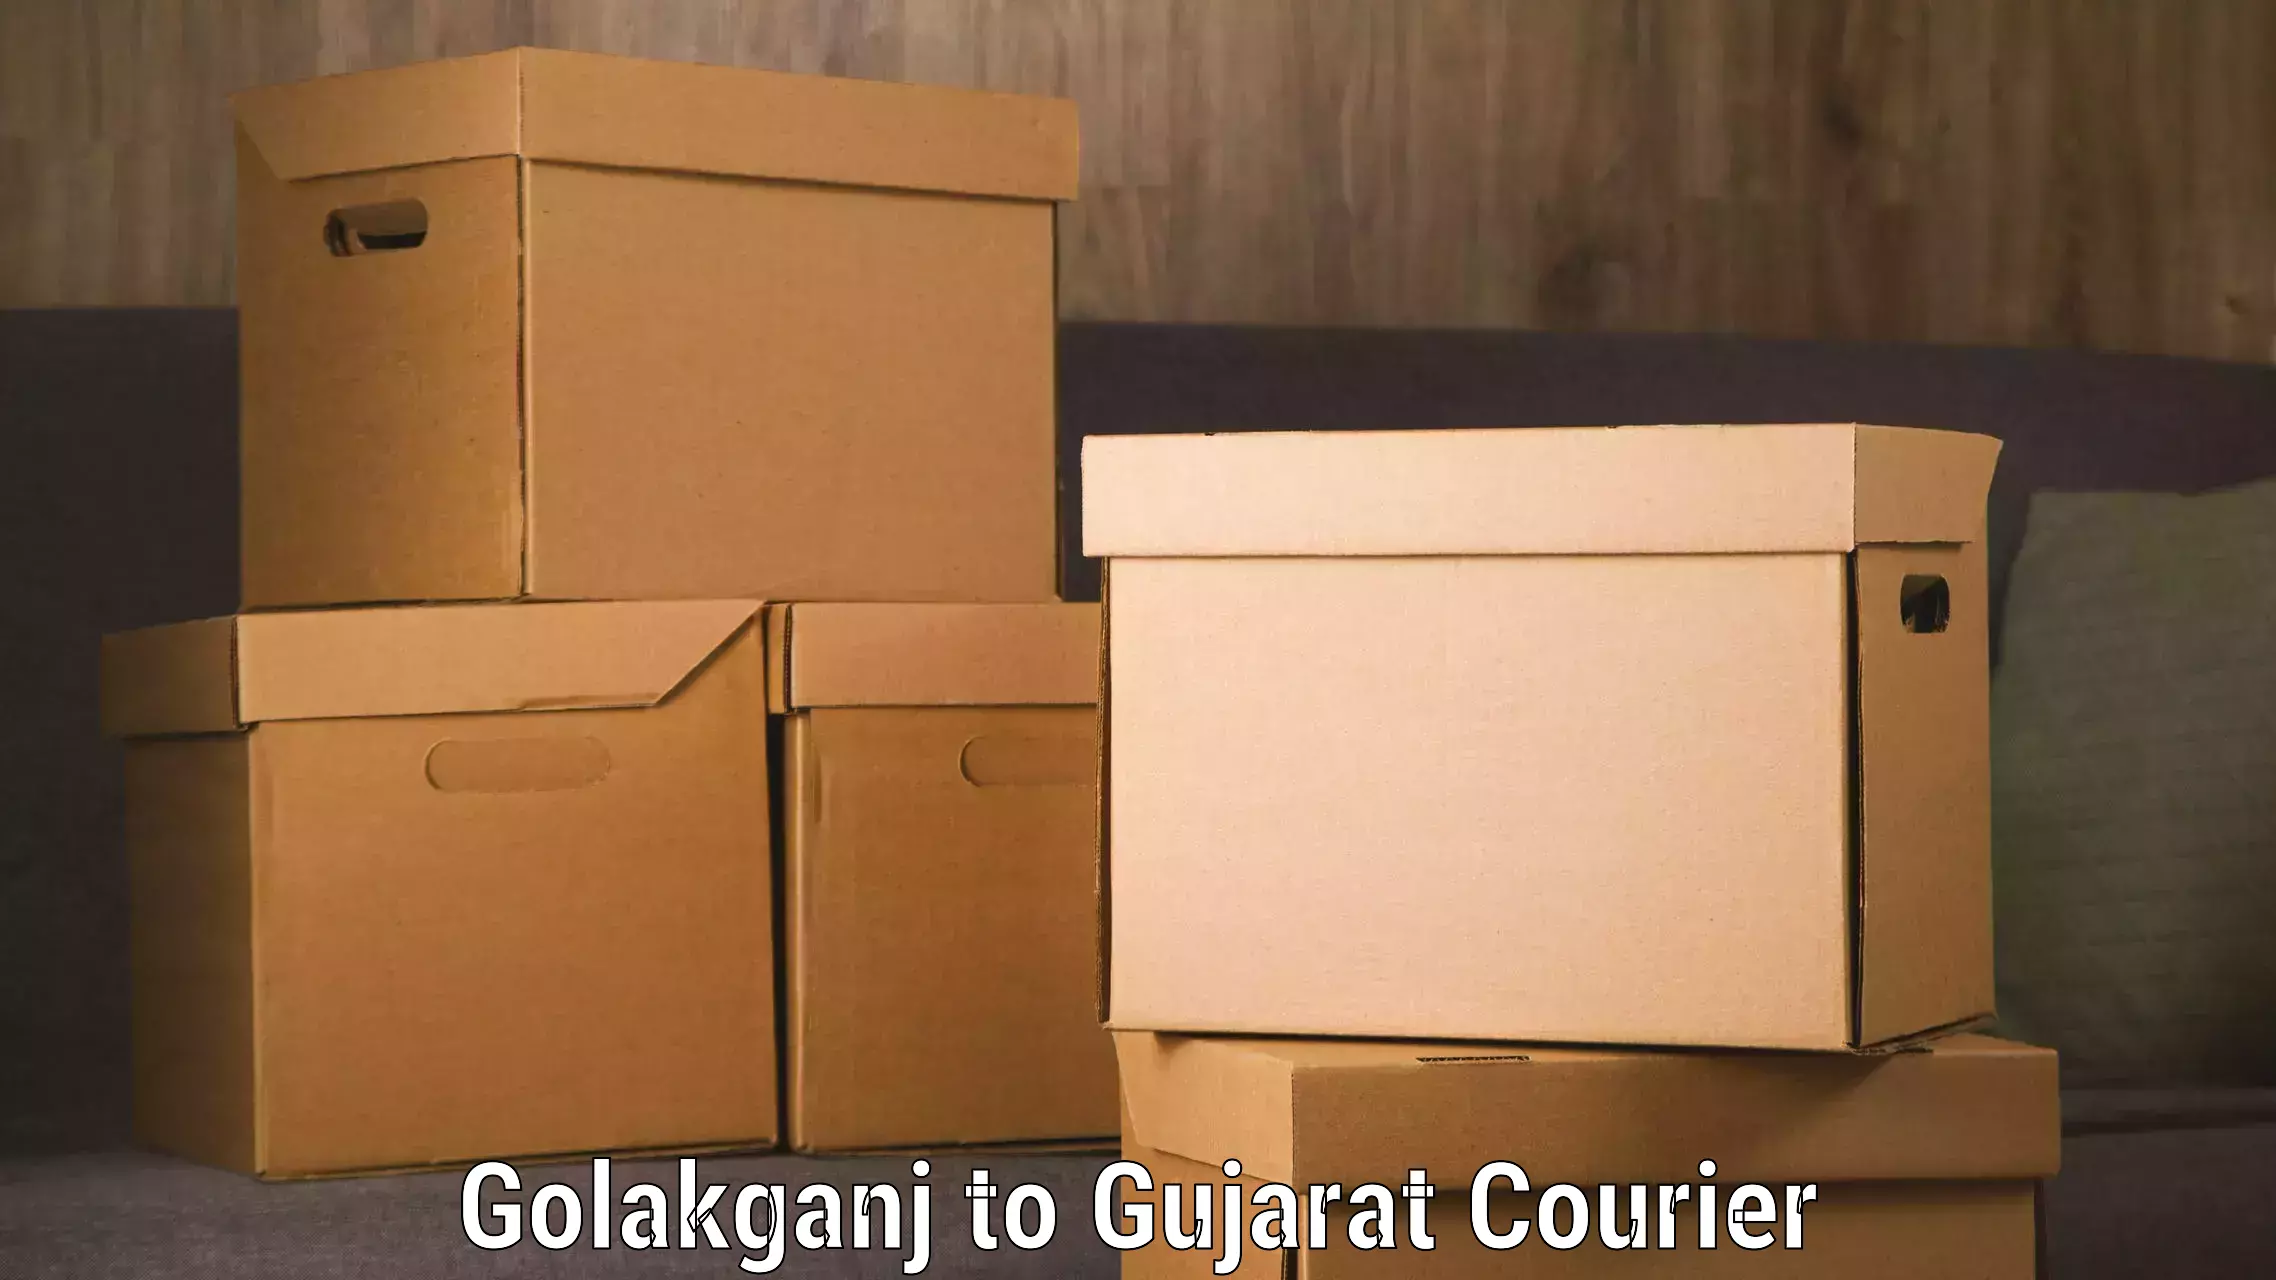 Same day luggage service Golakganj to Gujarat